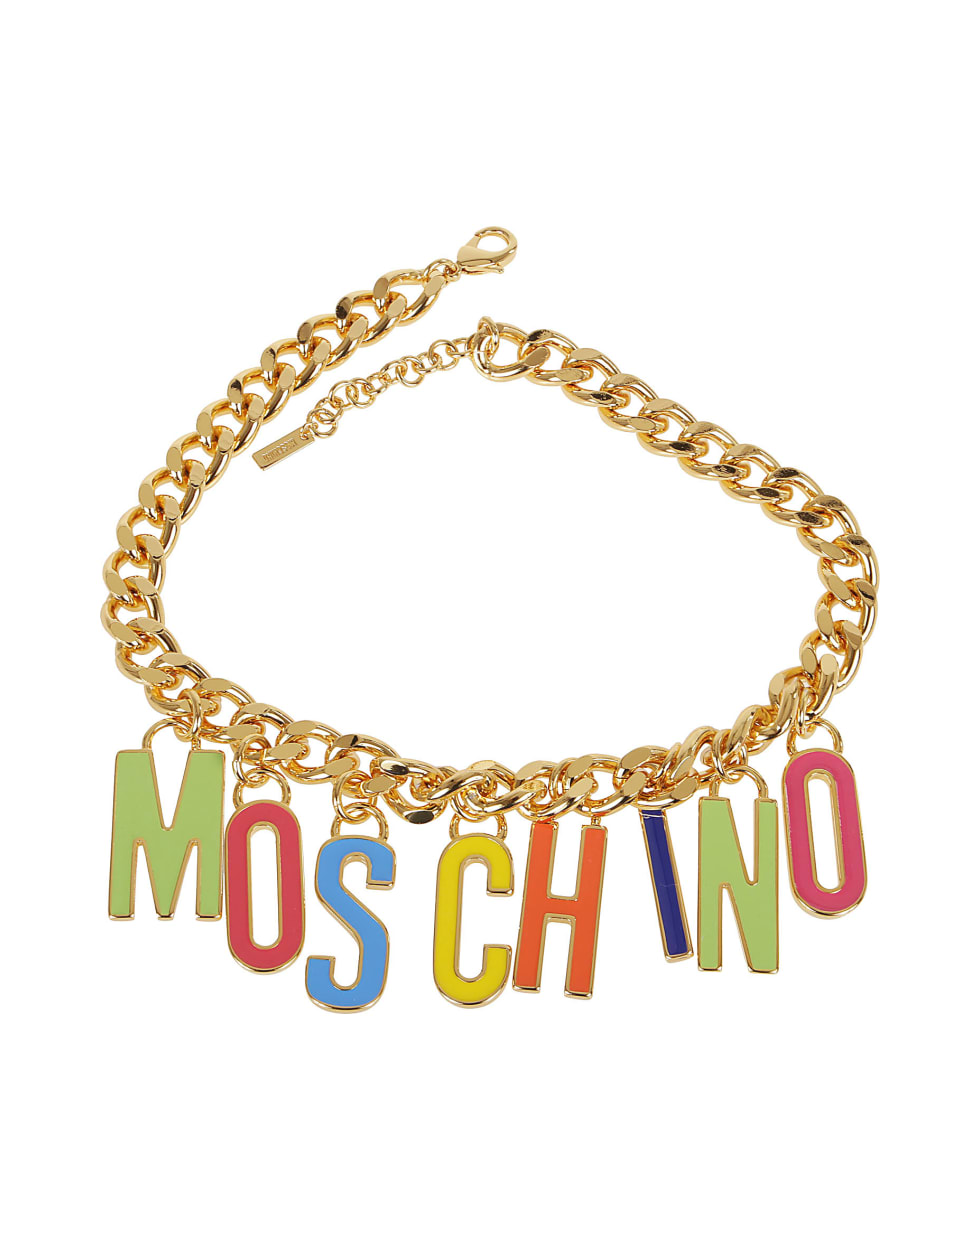 Moschino Bijoux Necklace - Fantasia Oro Lucido